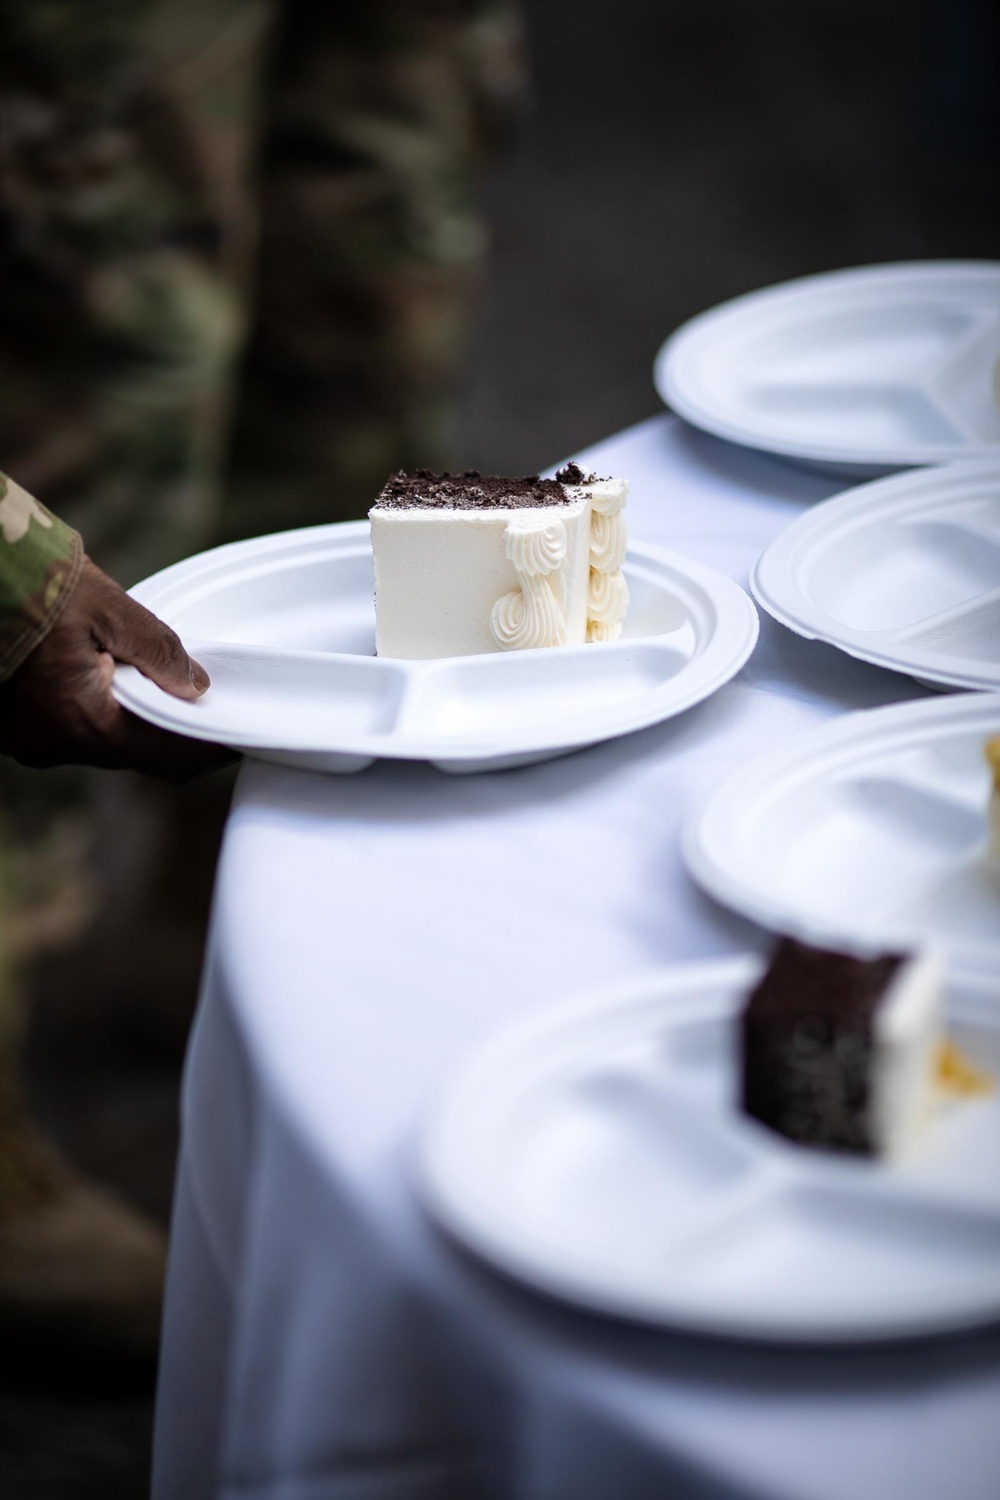 Task Force 46 Celebrates the U.S. Army's 245th Birthday